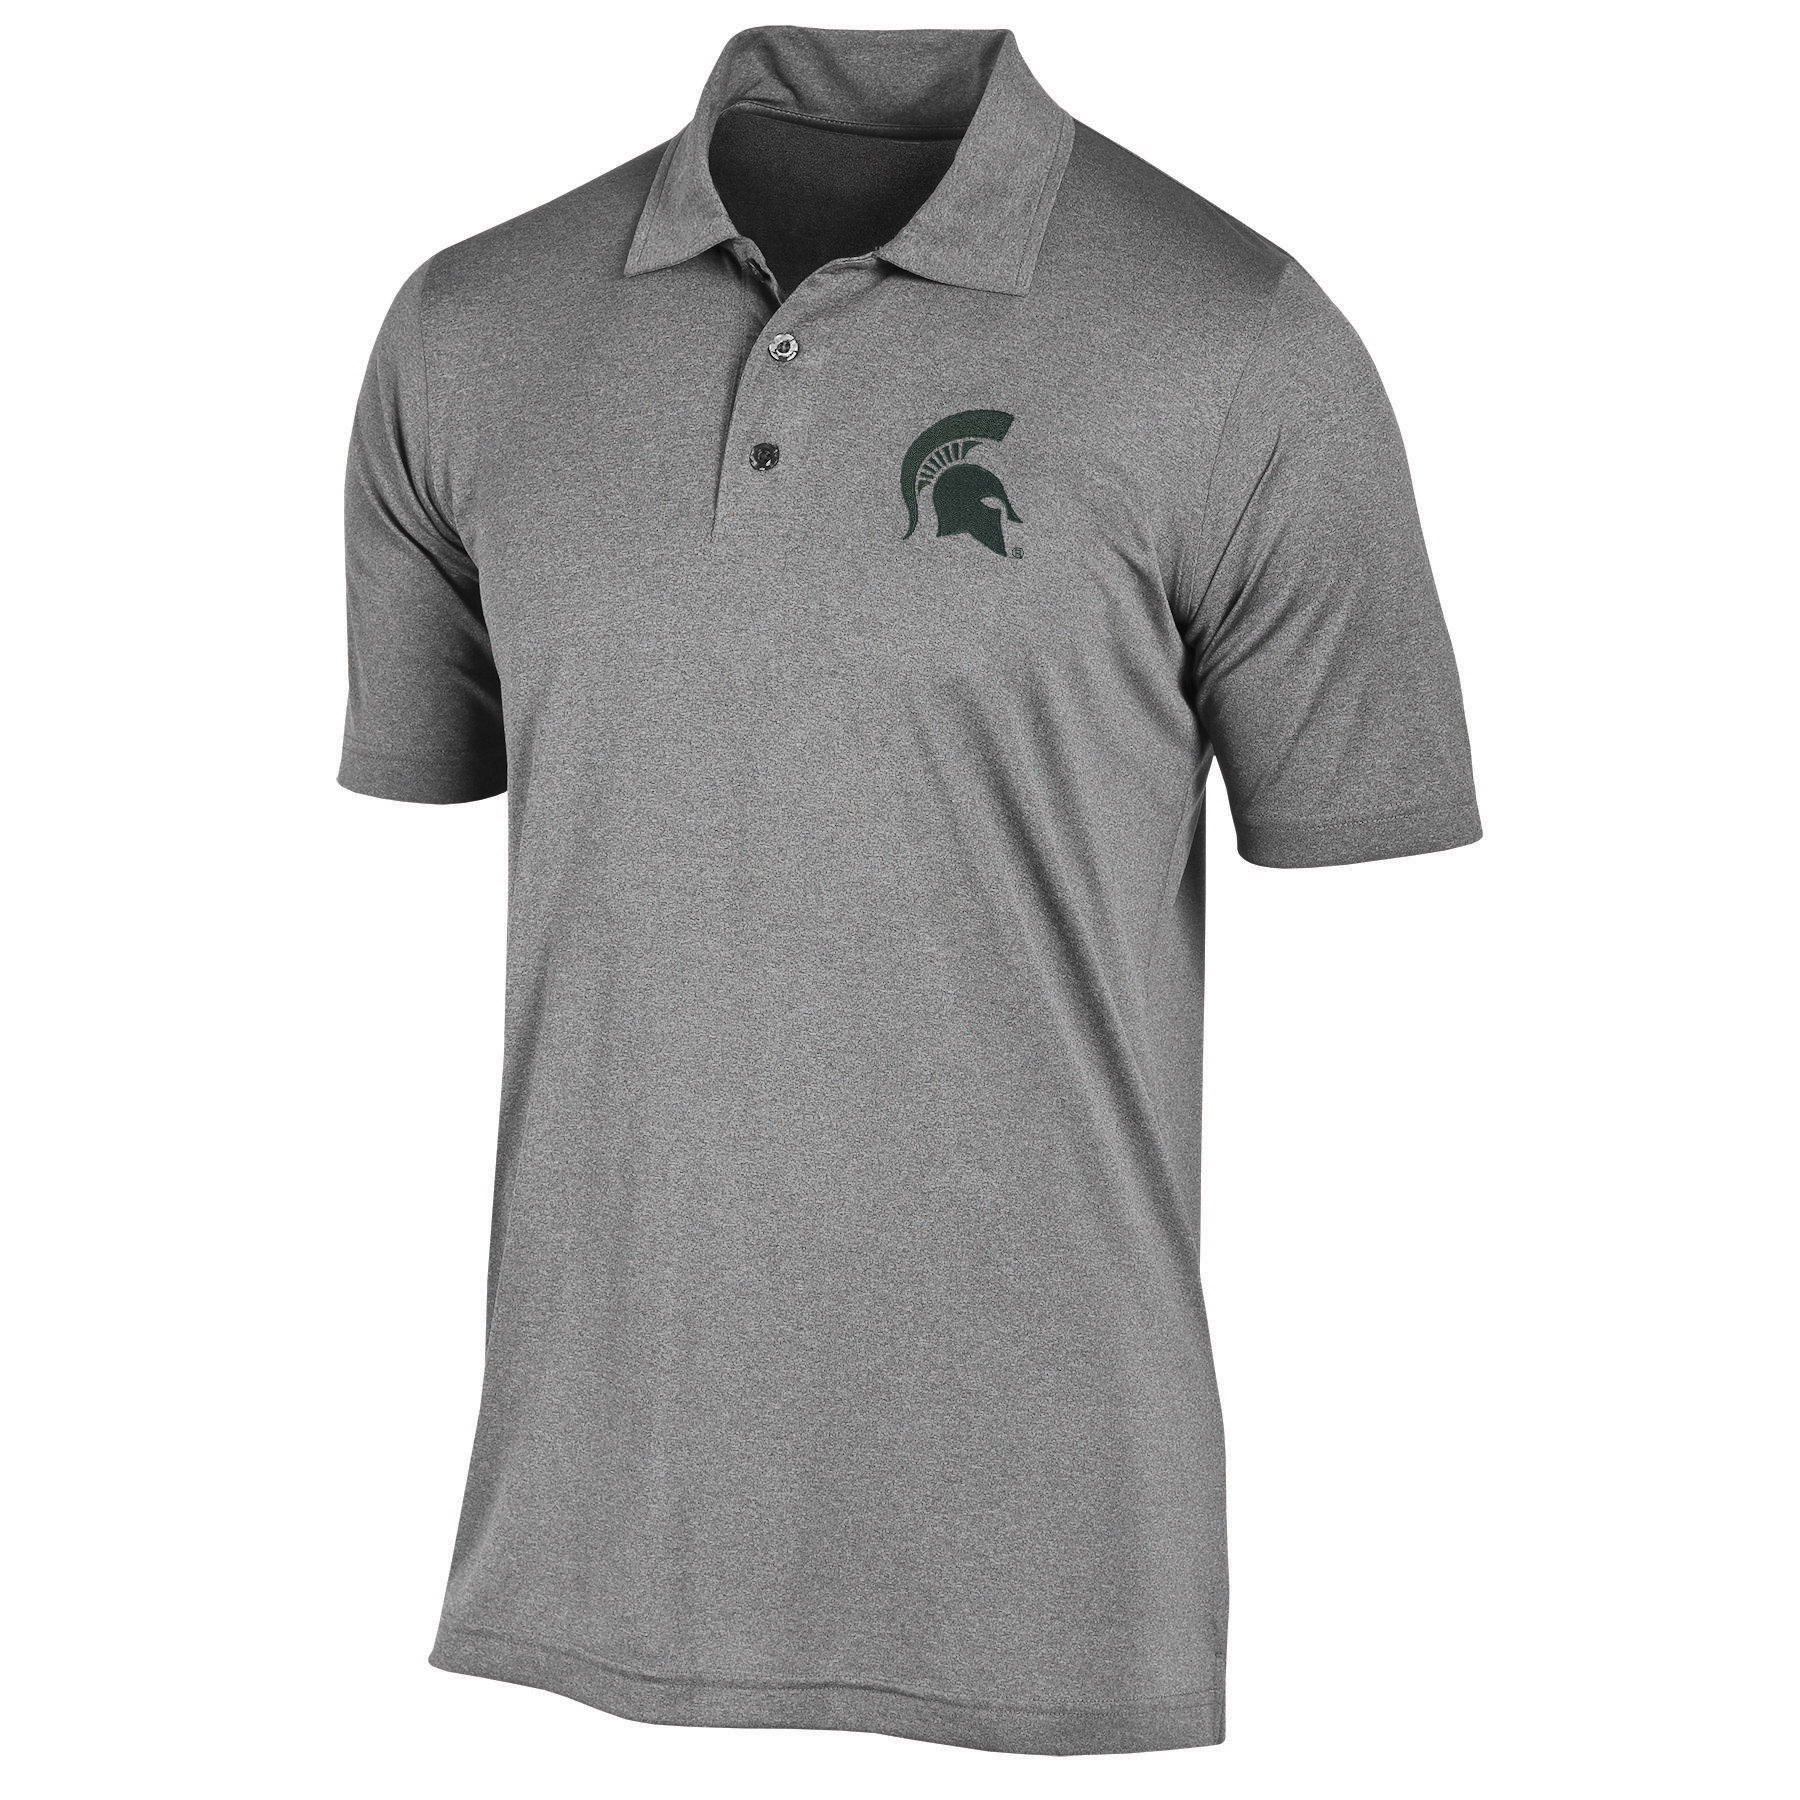 NCAA Men's Polo Shirt - Michigan State University Spartans